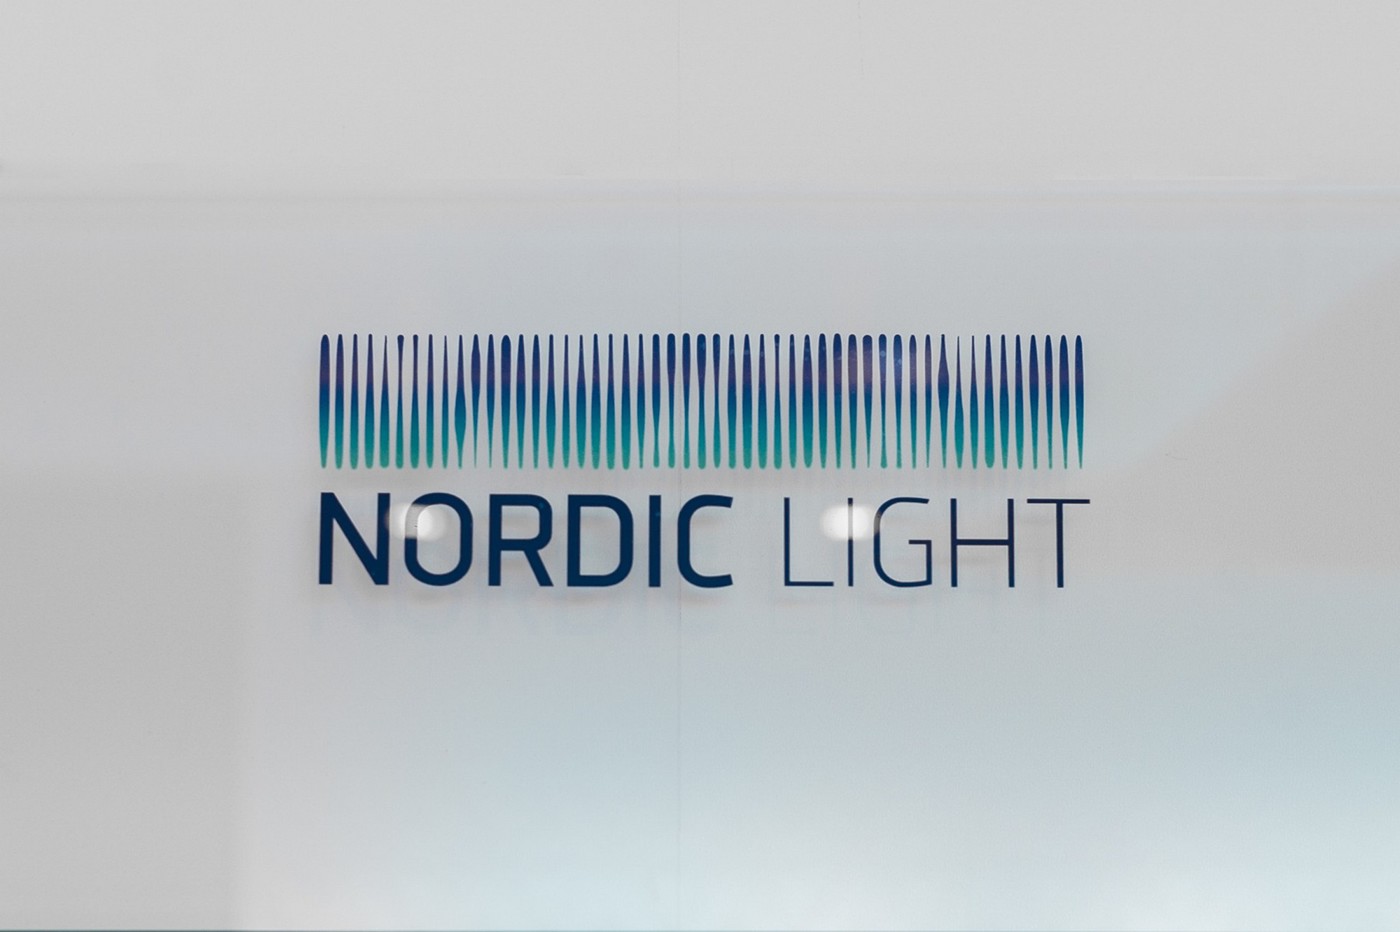 wayfinding nordic light Remion design expert budapest system pos Signage